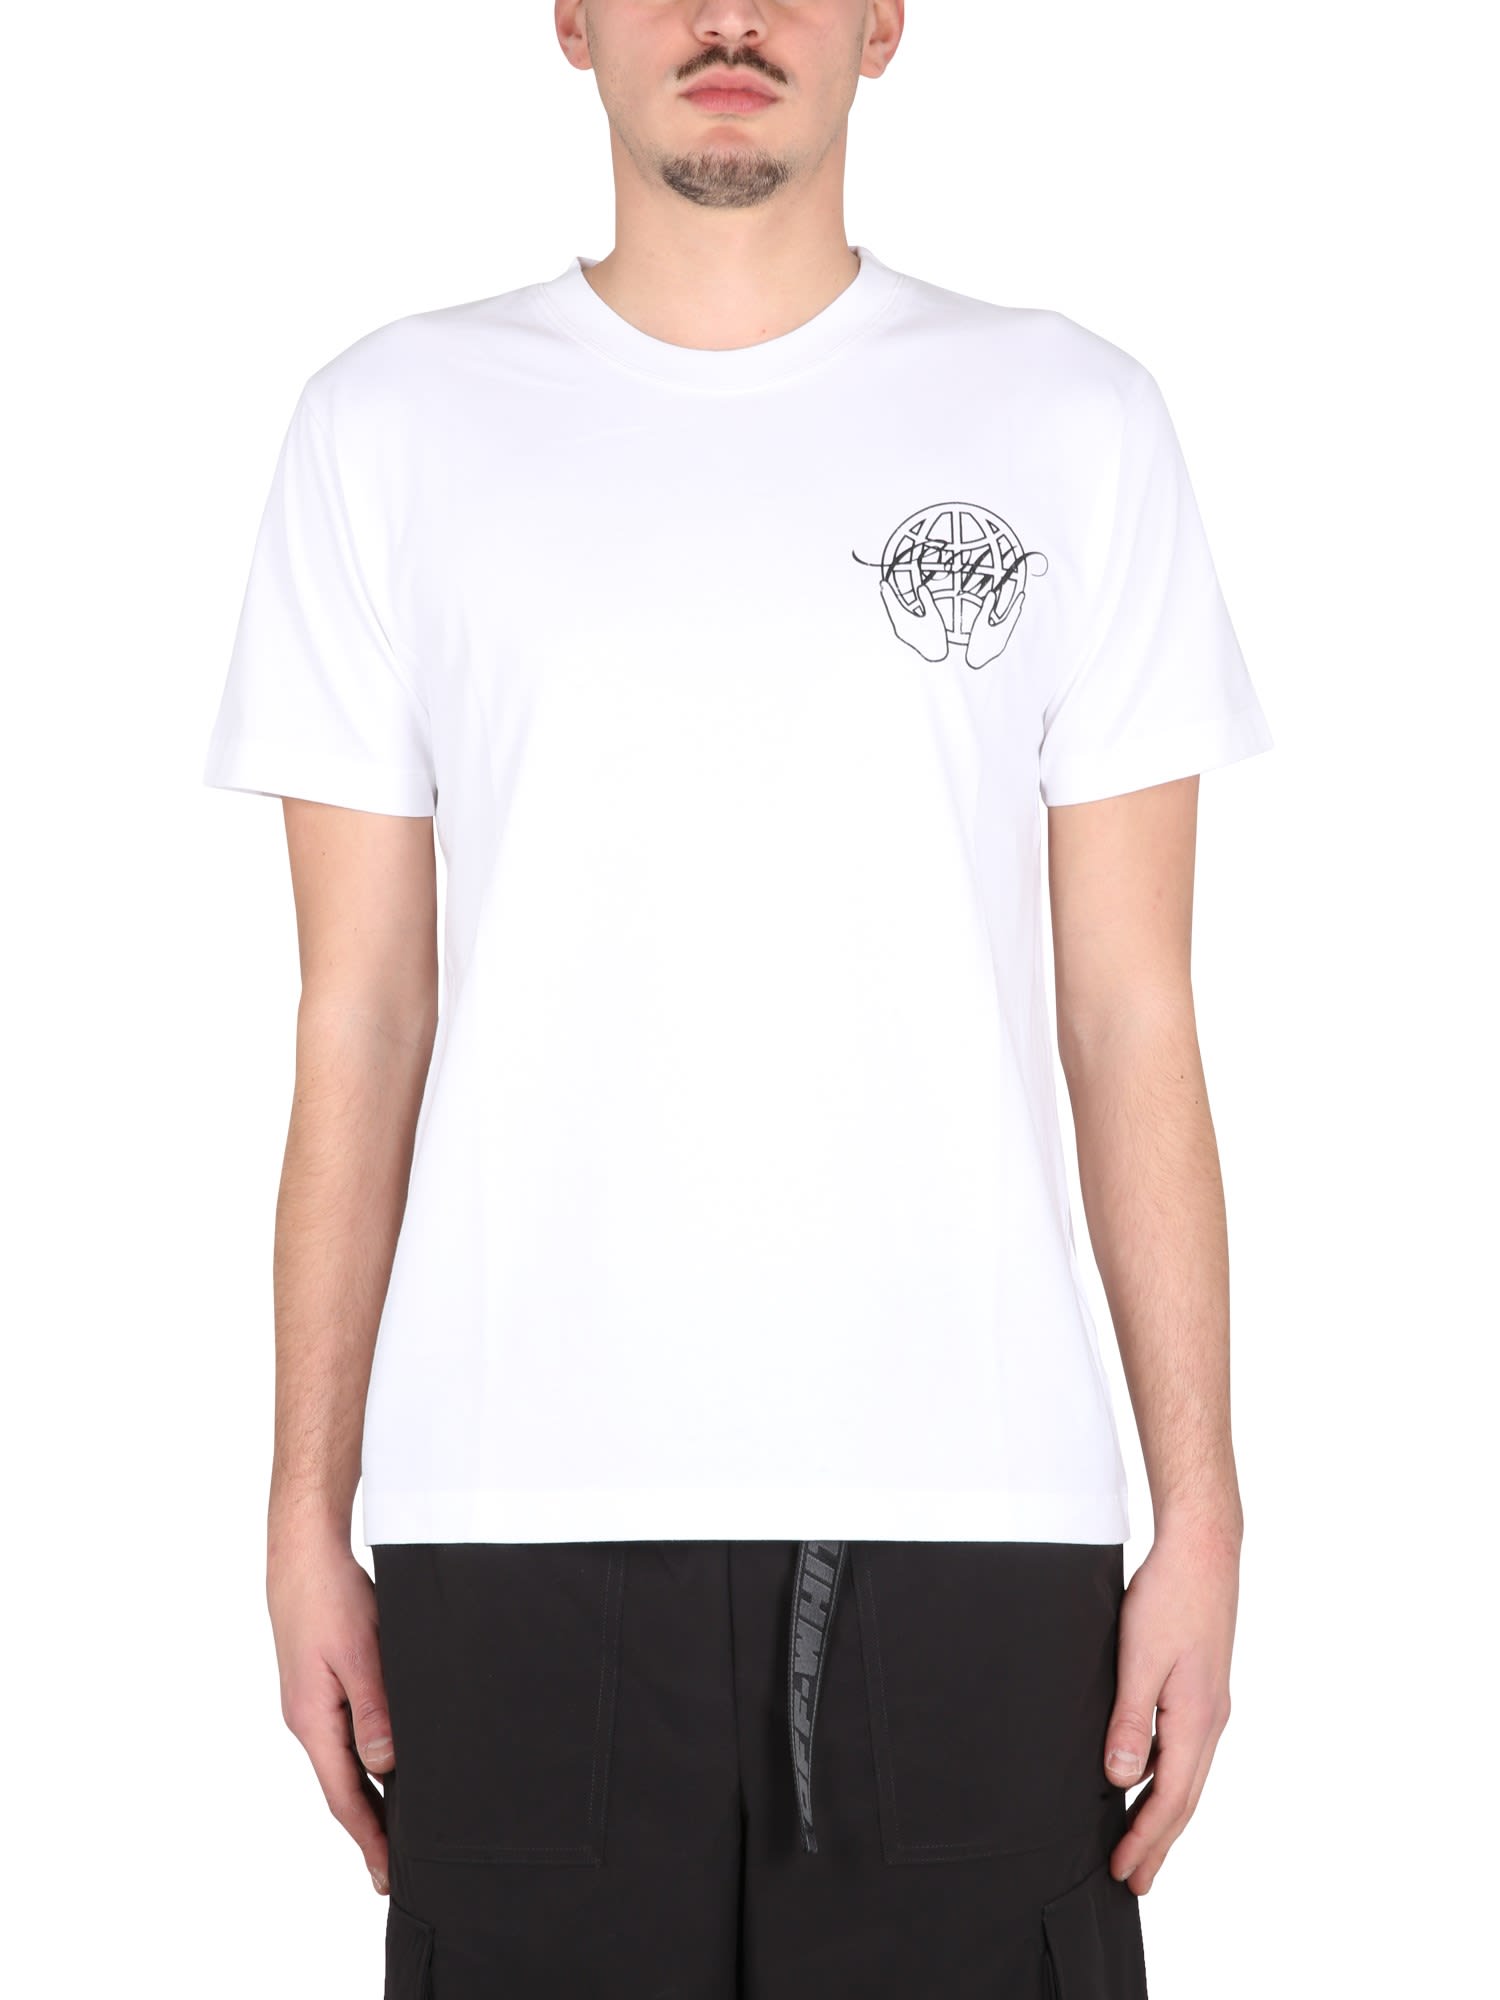 Off-White Crewneck T-shirt